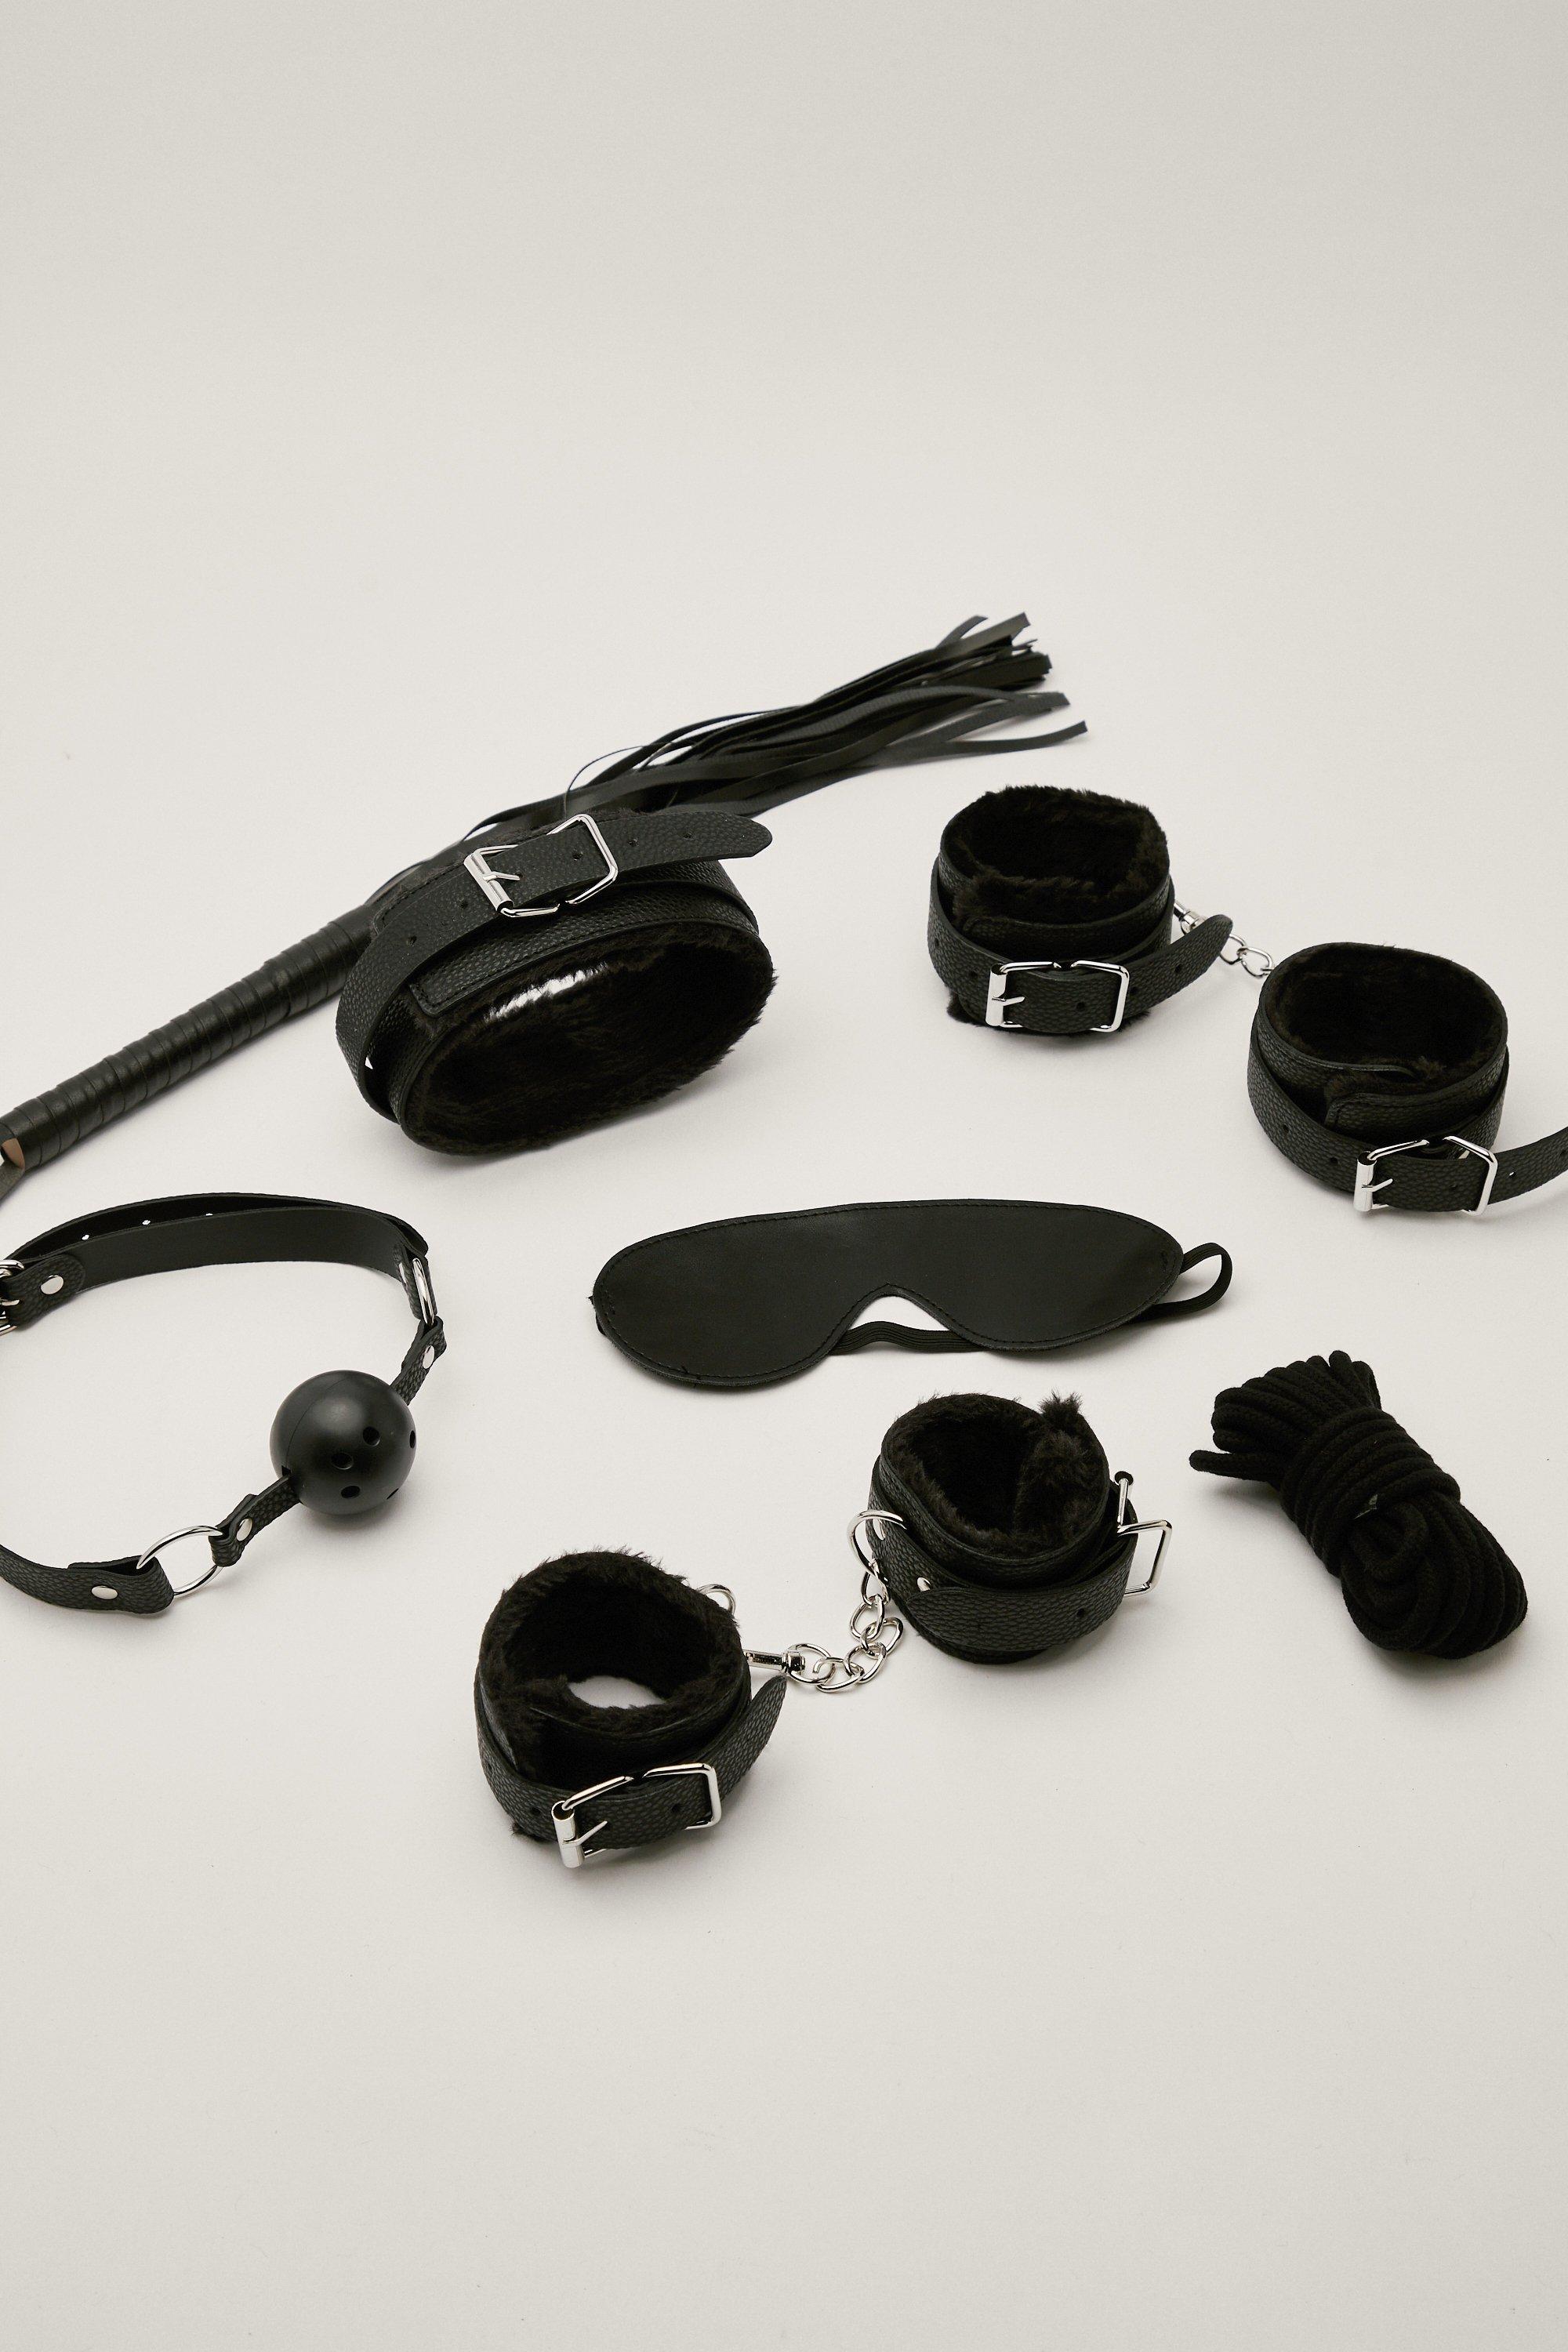 Luxury faux leather bondage kit 10pcs BDSM set with a storage bag